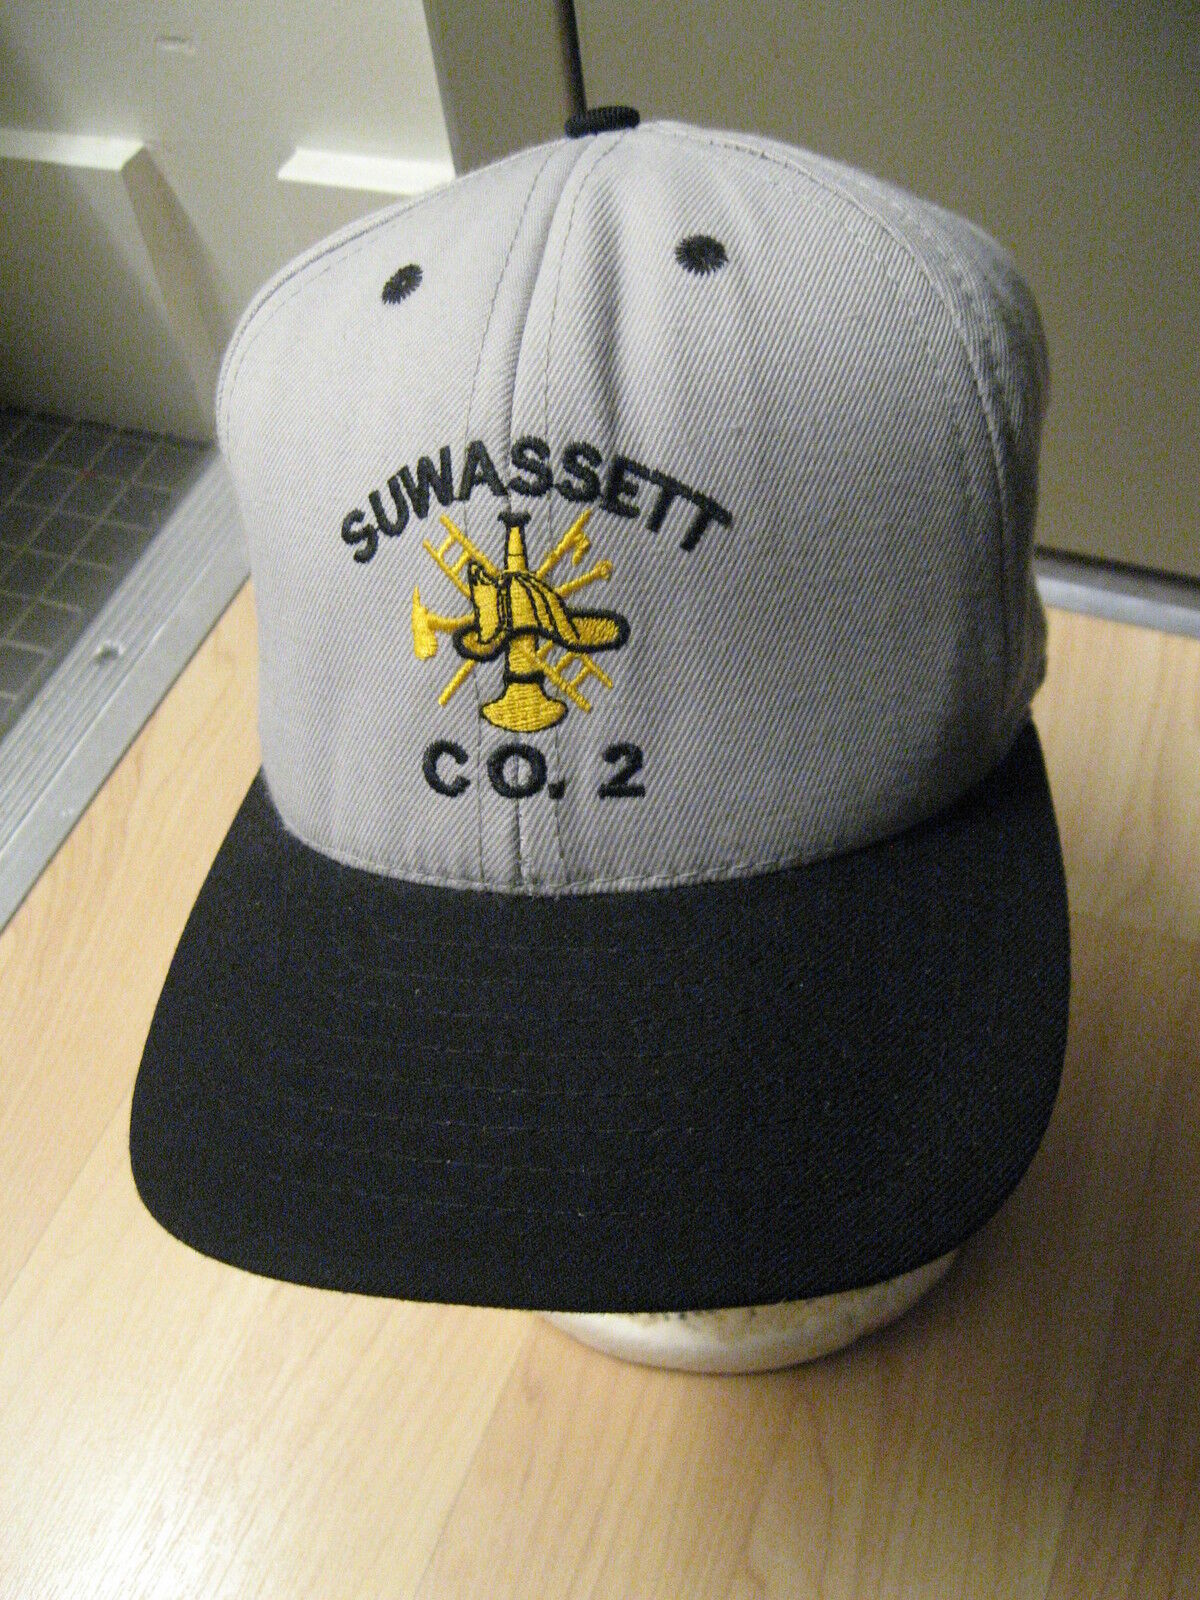 Suwassett Fire Department Co. 2 Port Jefferson New York 1980's Baseball Hat Cap